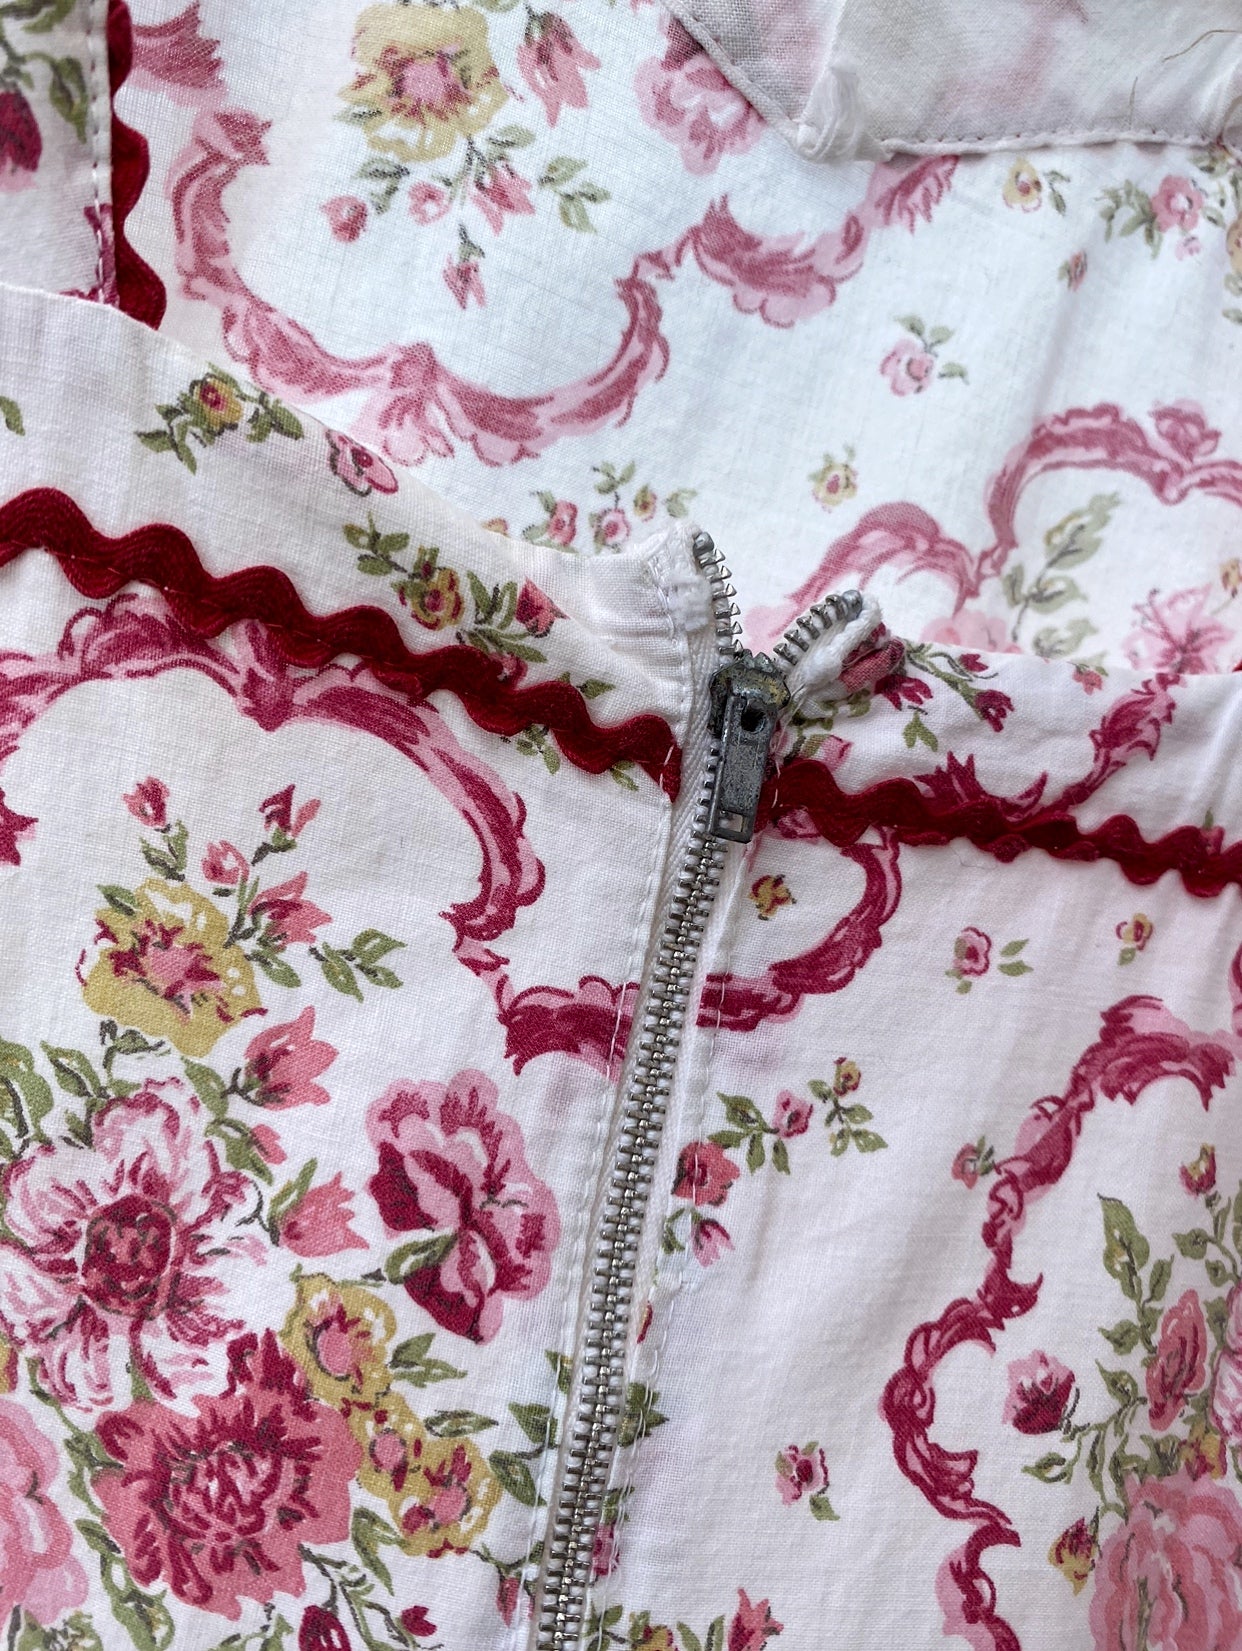 Darling 1950s Floral Cotton Dress w/ Ric Rac- M